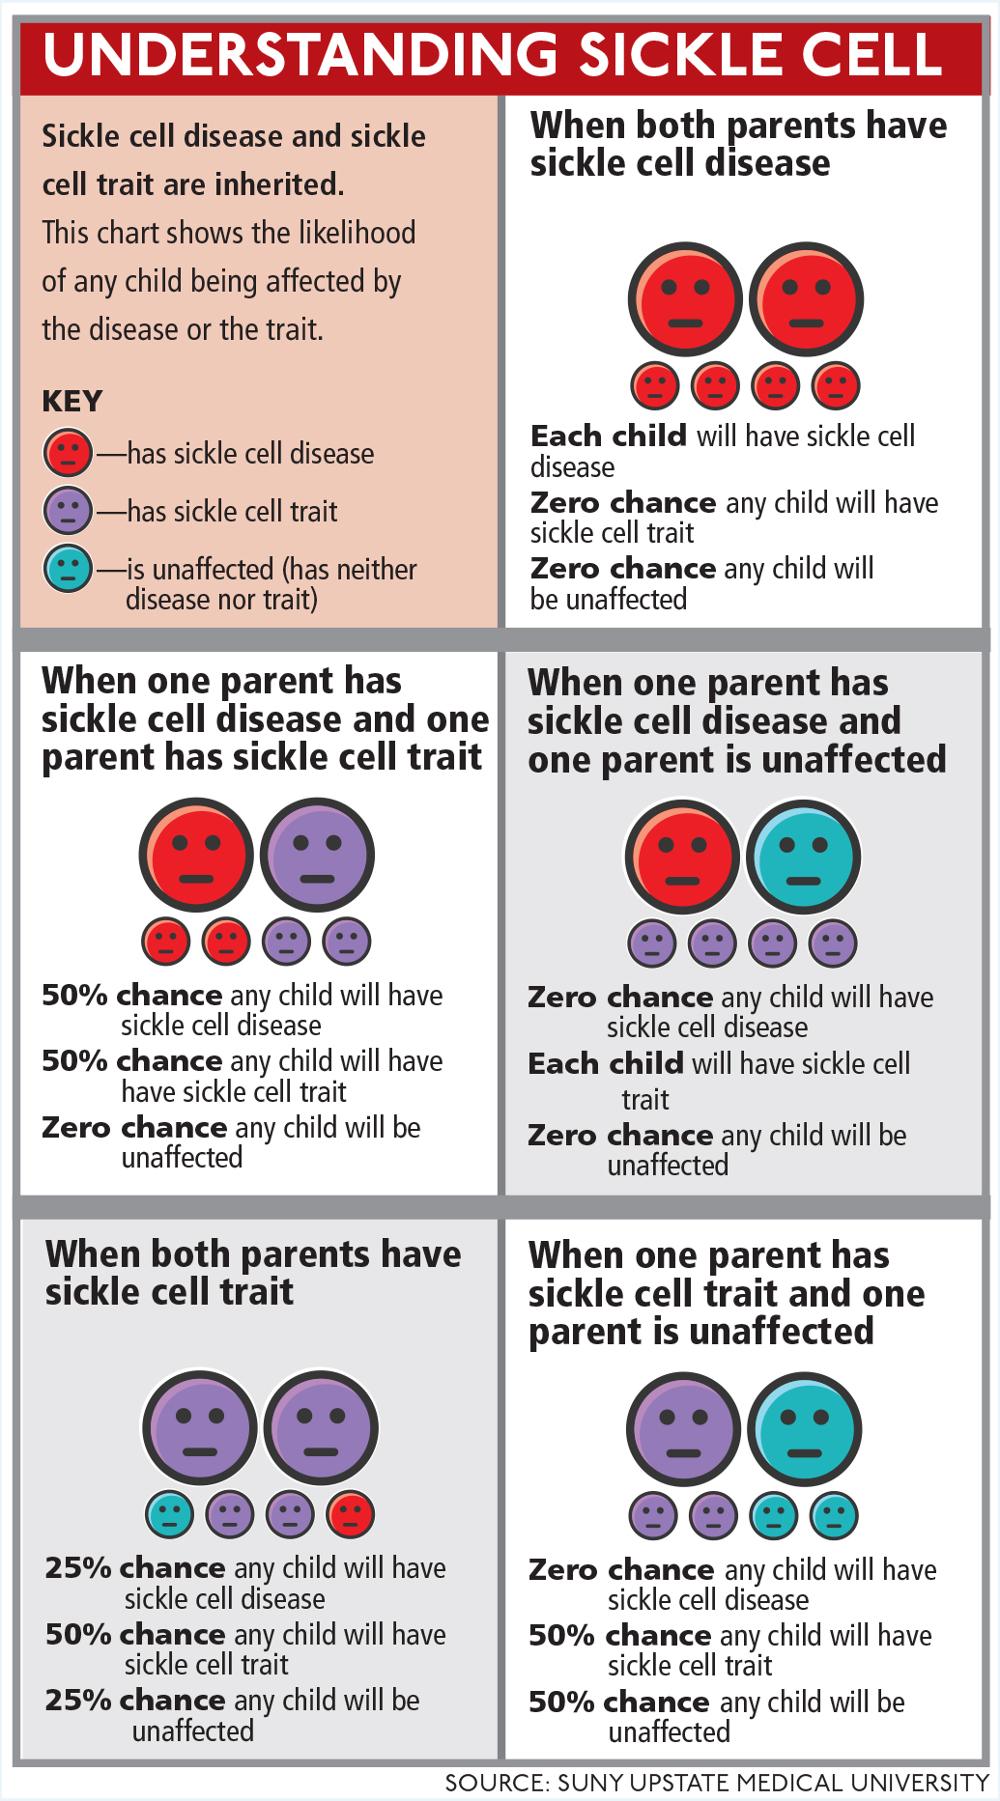 Sickle cell disease inheritance chart